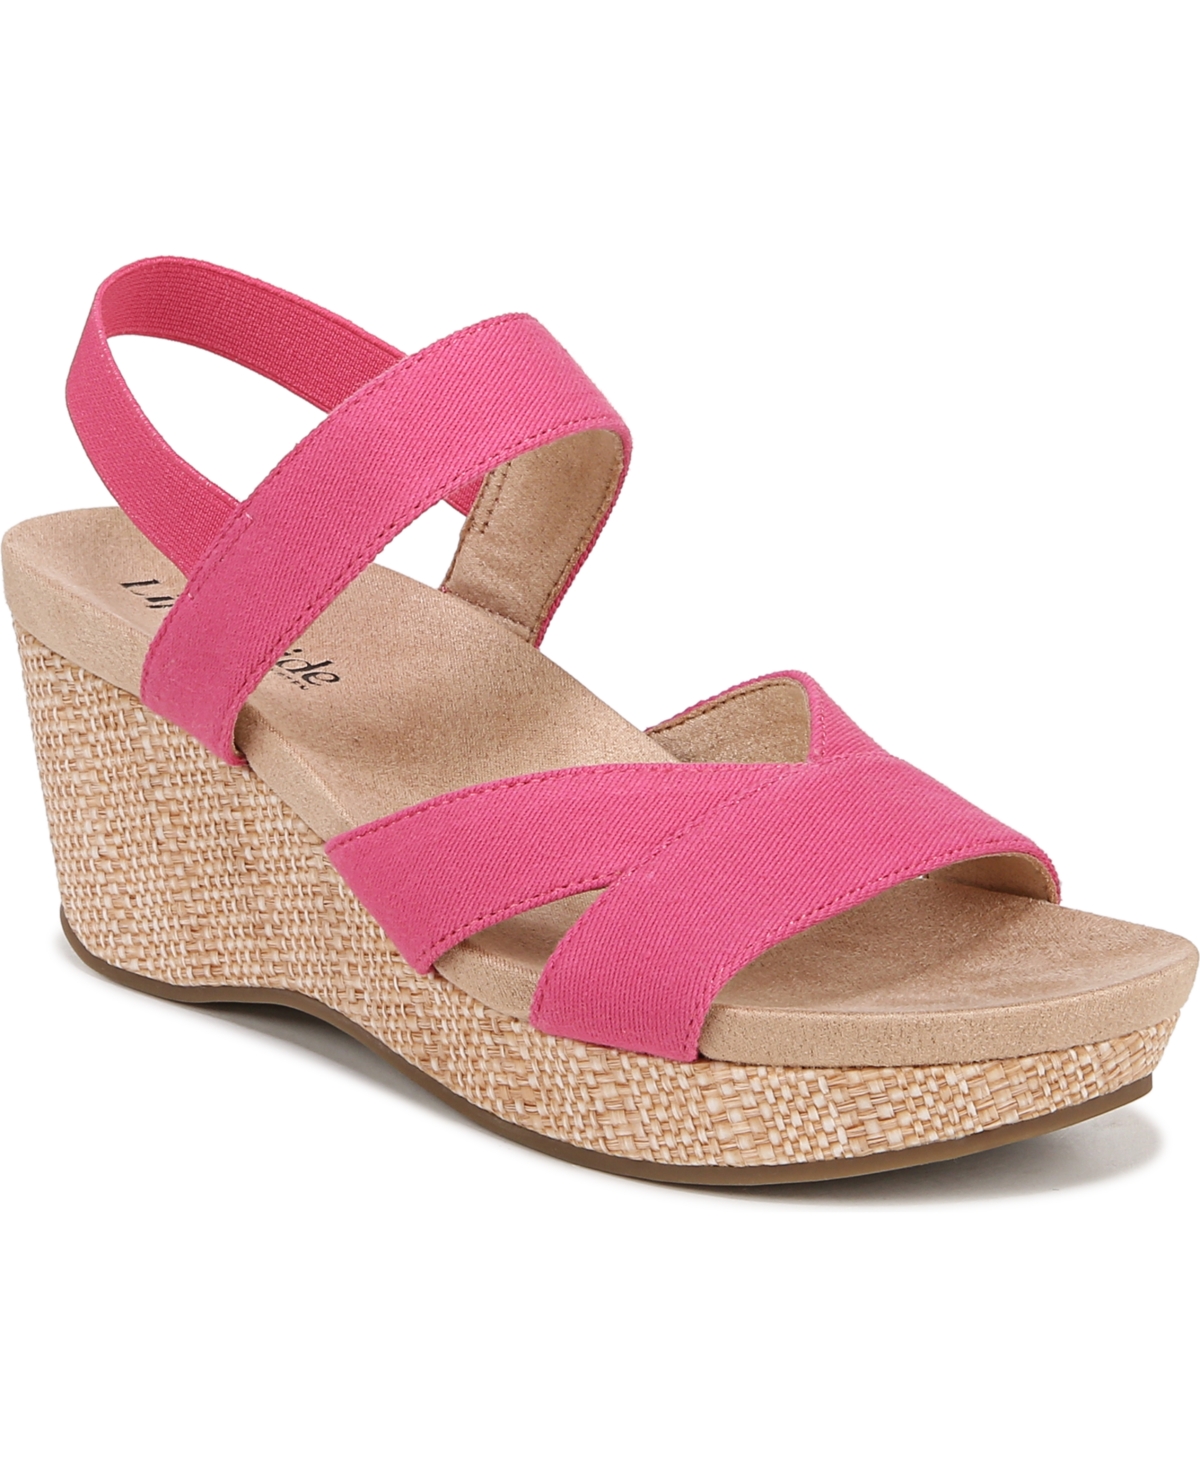 Women's Danita Wedge Sandals - French Pink Fabric